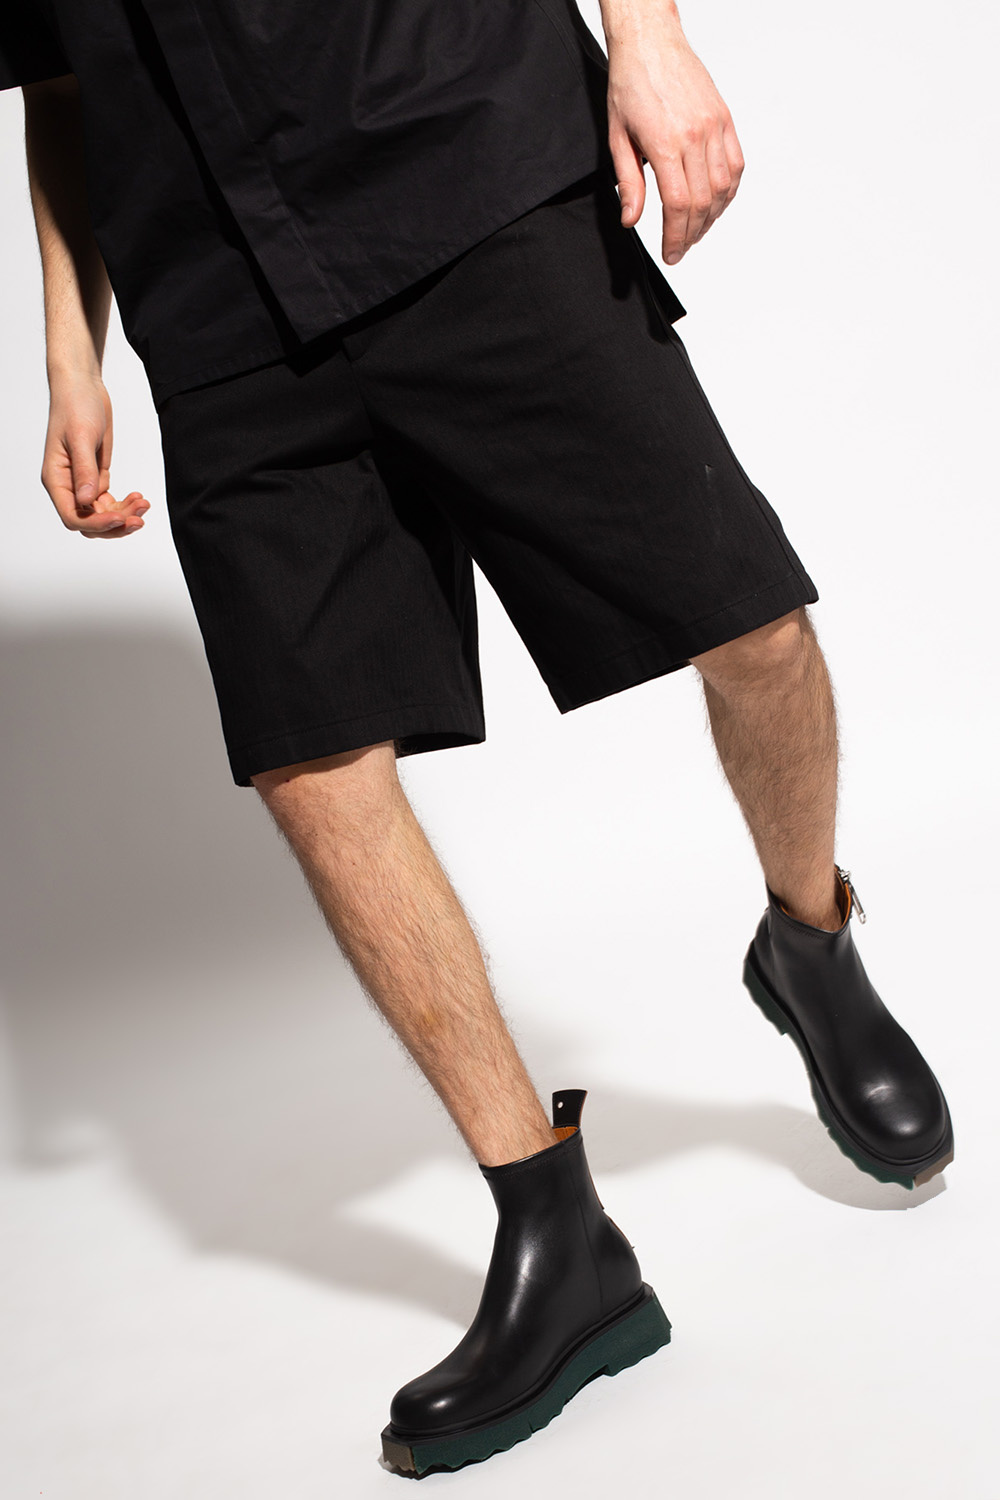 JIL SANDER+ Patched shorts